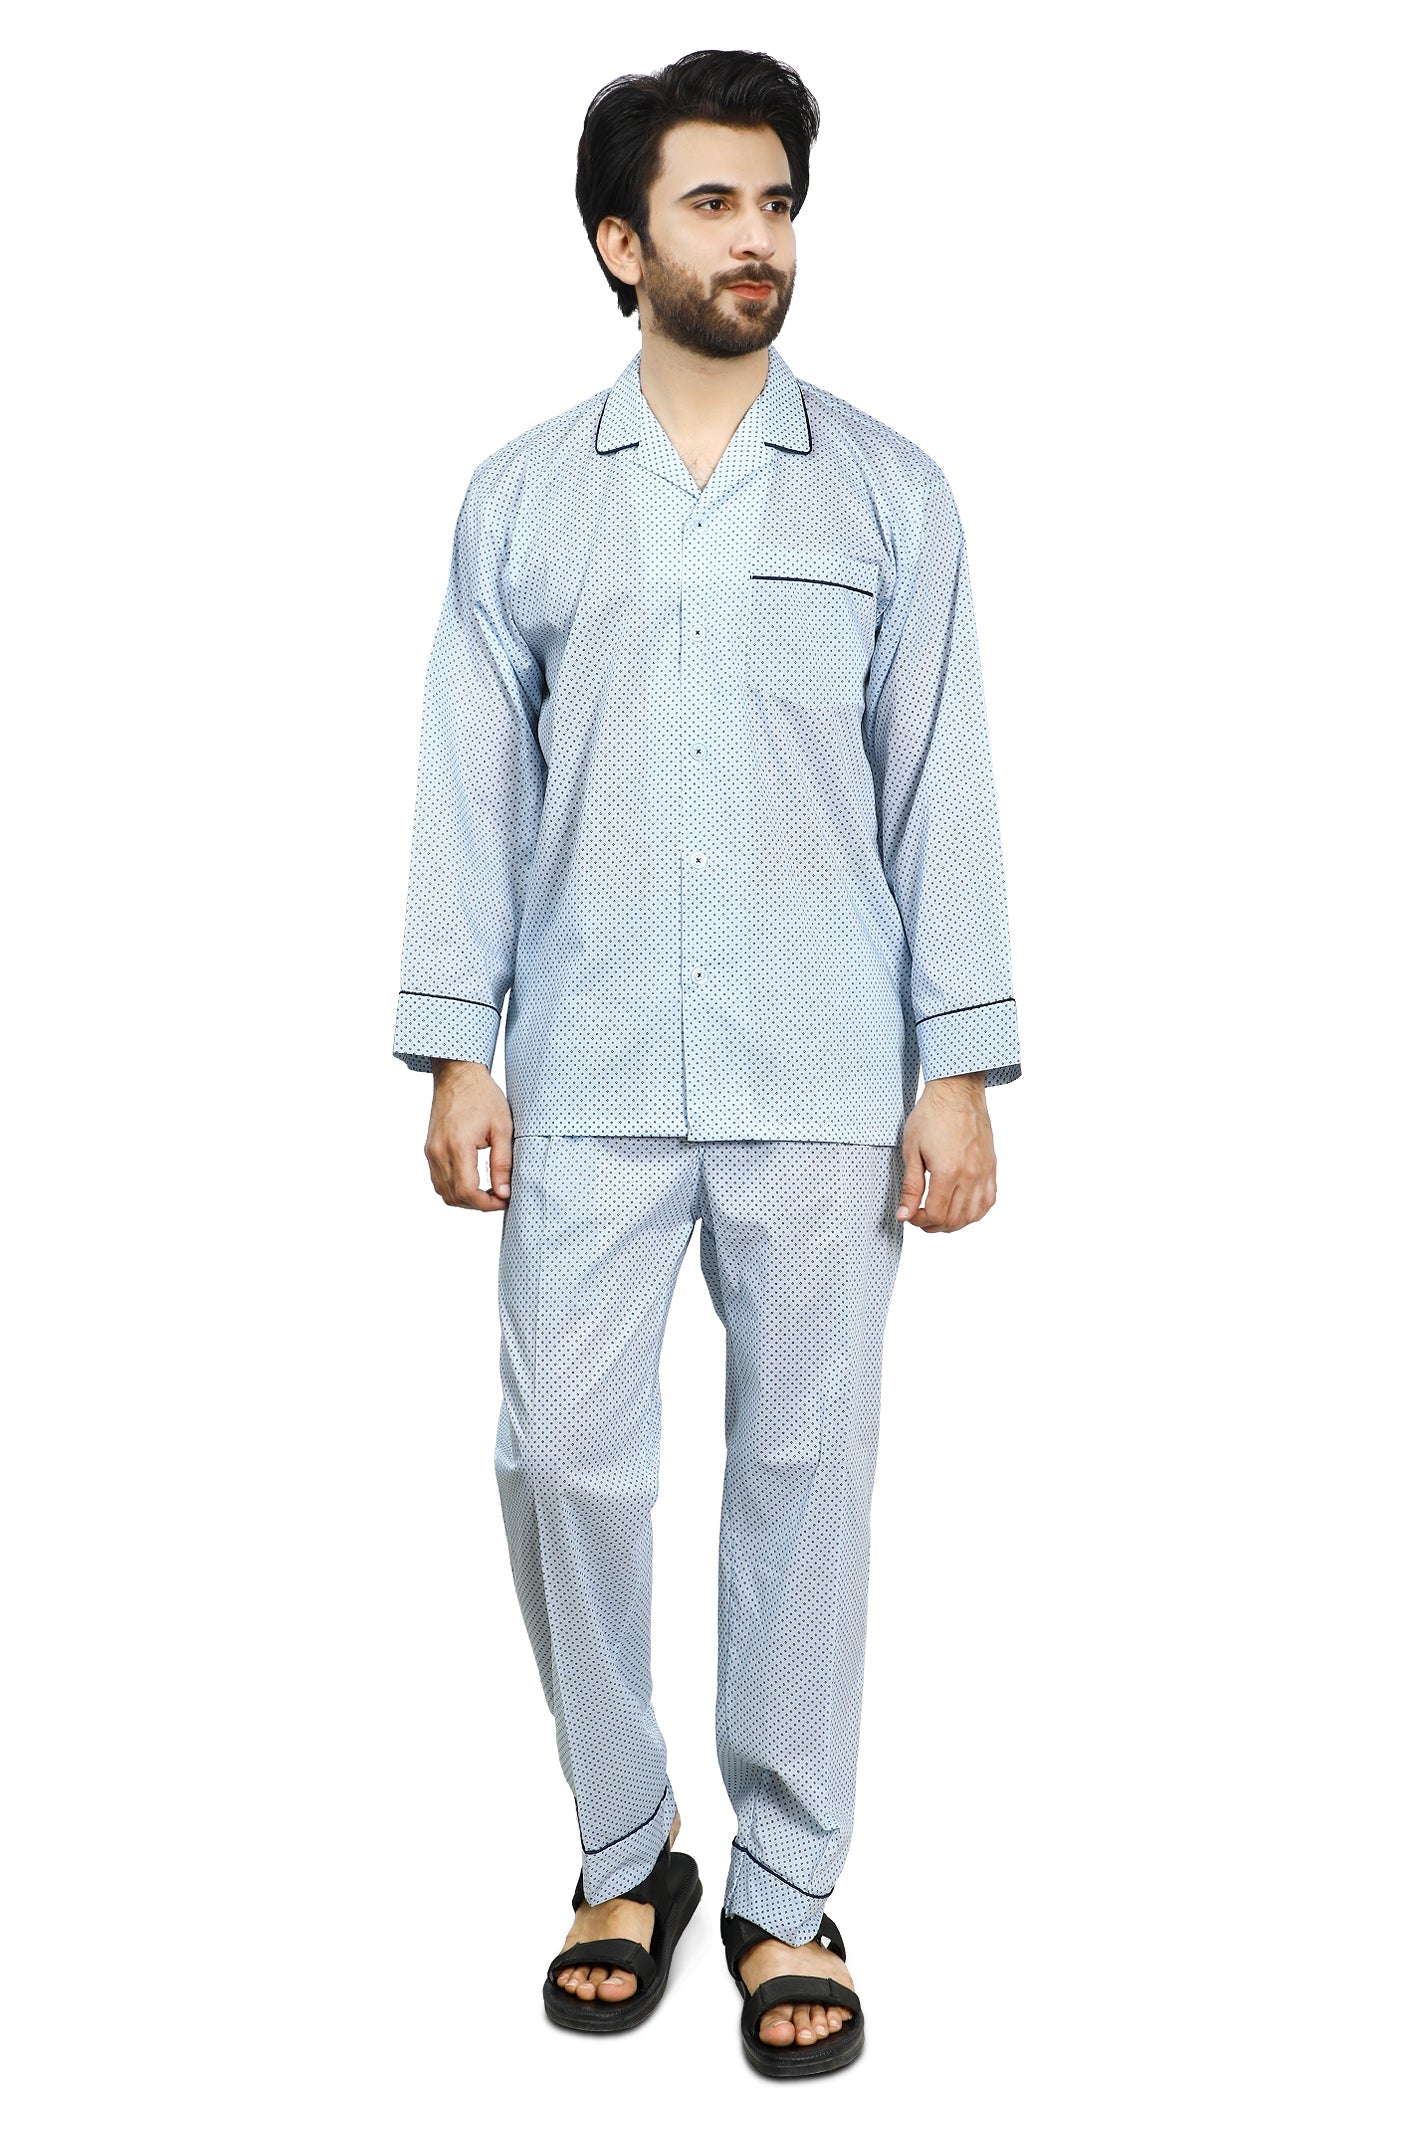 Diner's Night Suit for Men SKU: FNS011-SKY BLUE - Diners